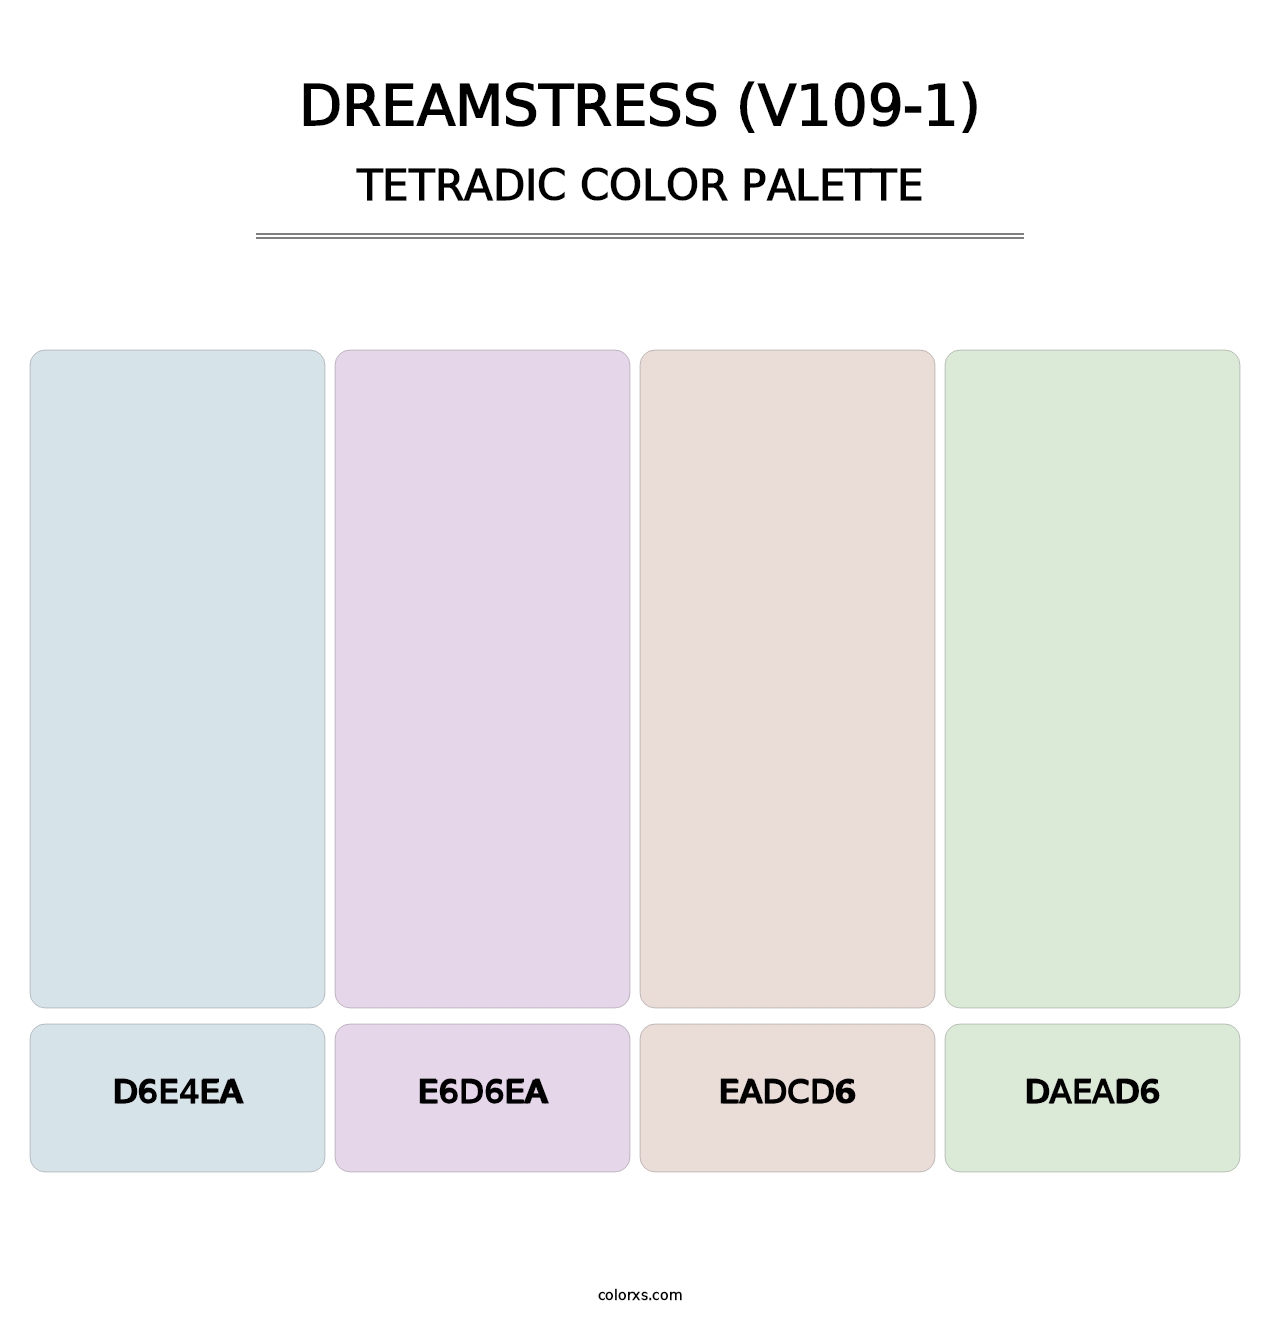 Dreamstress (V109-1) - Tetradic Color Palette